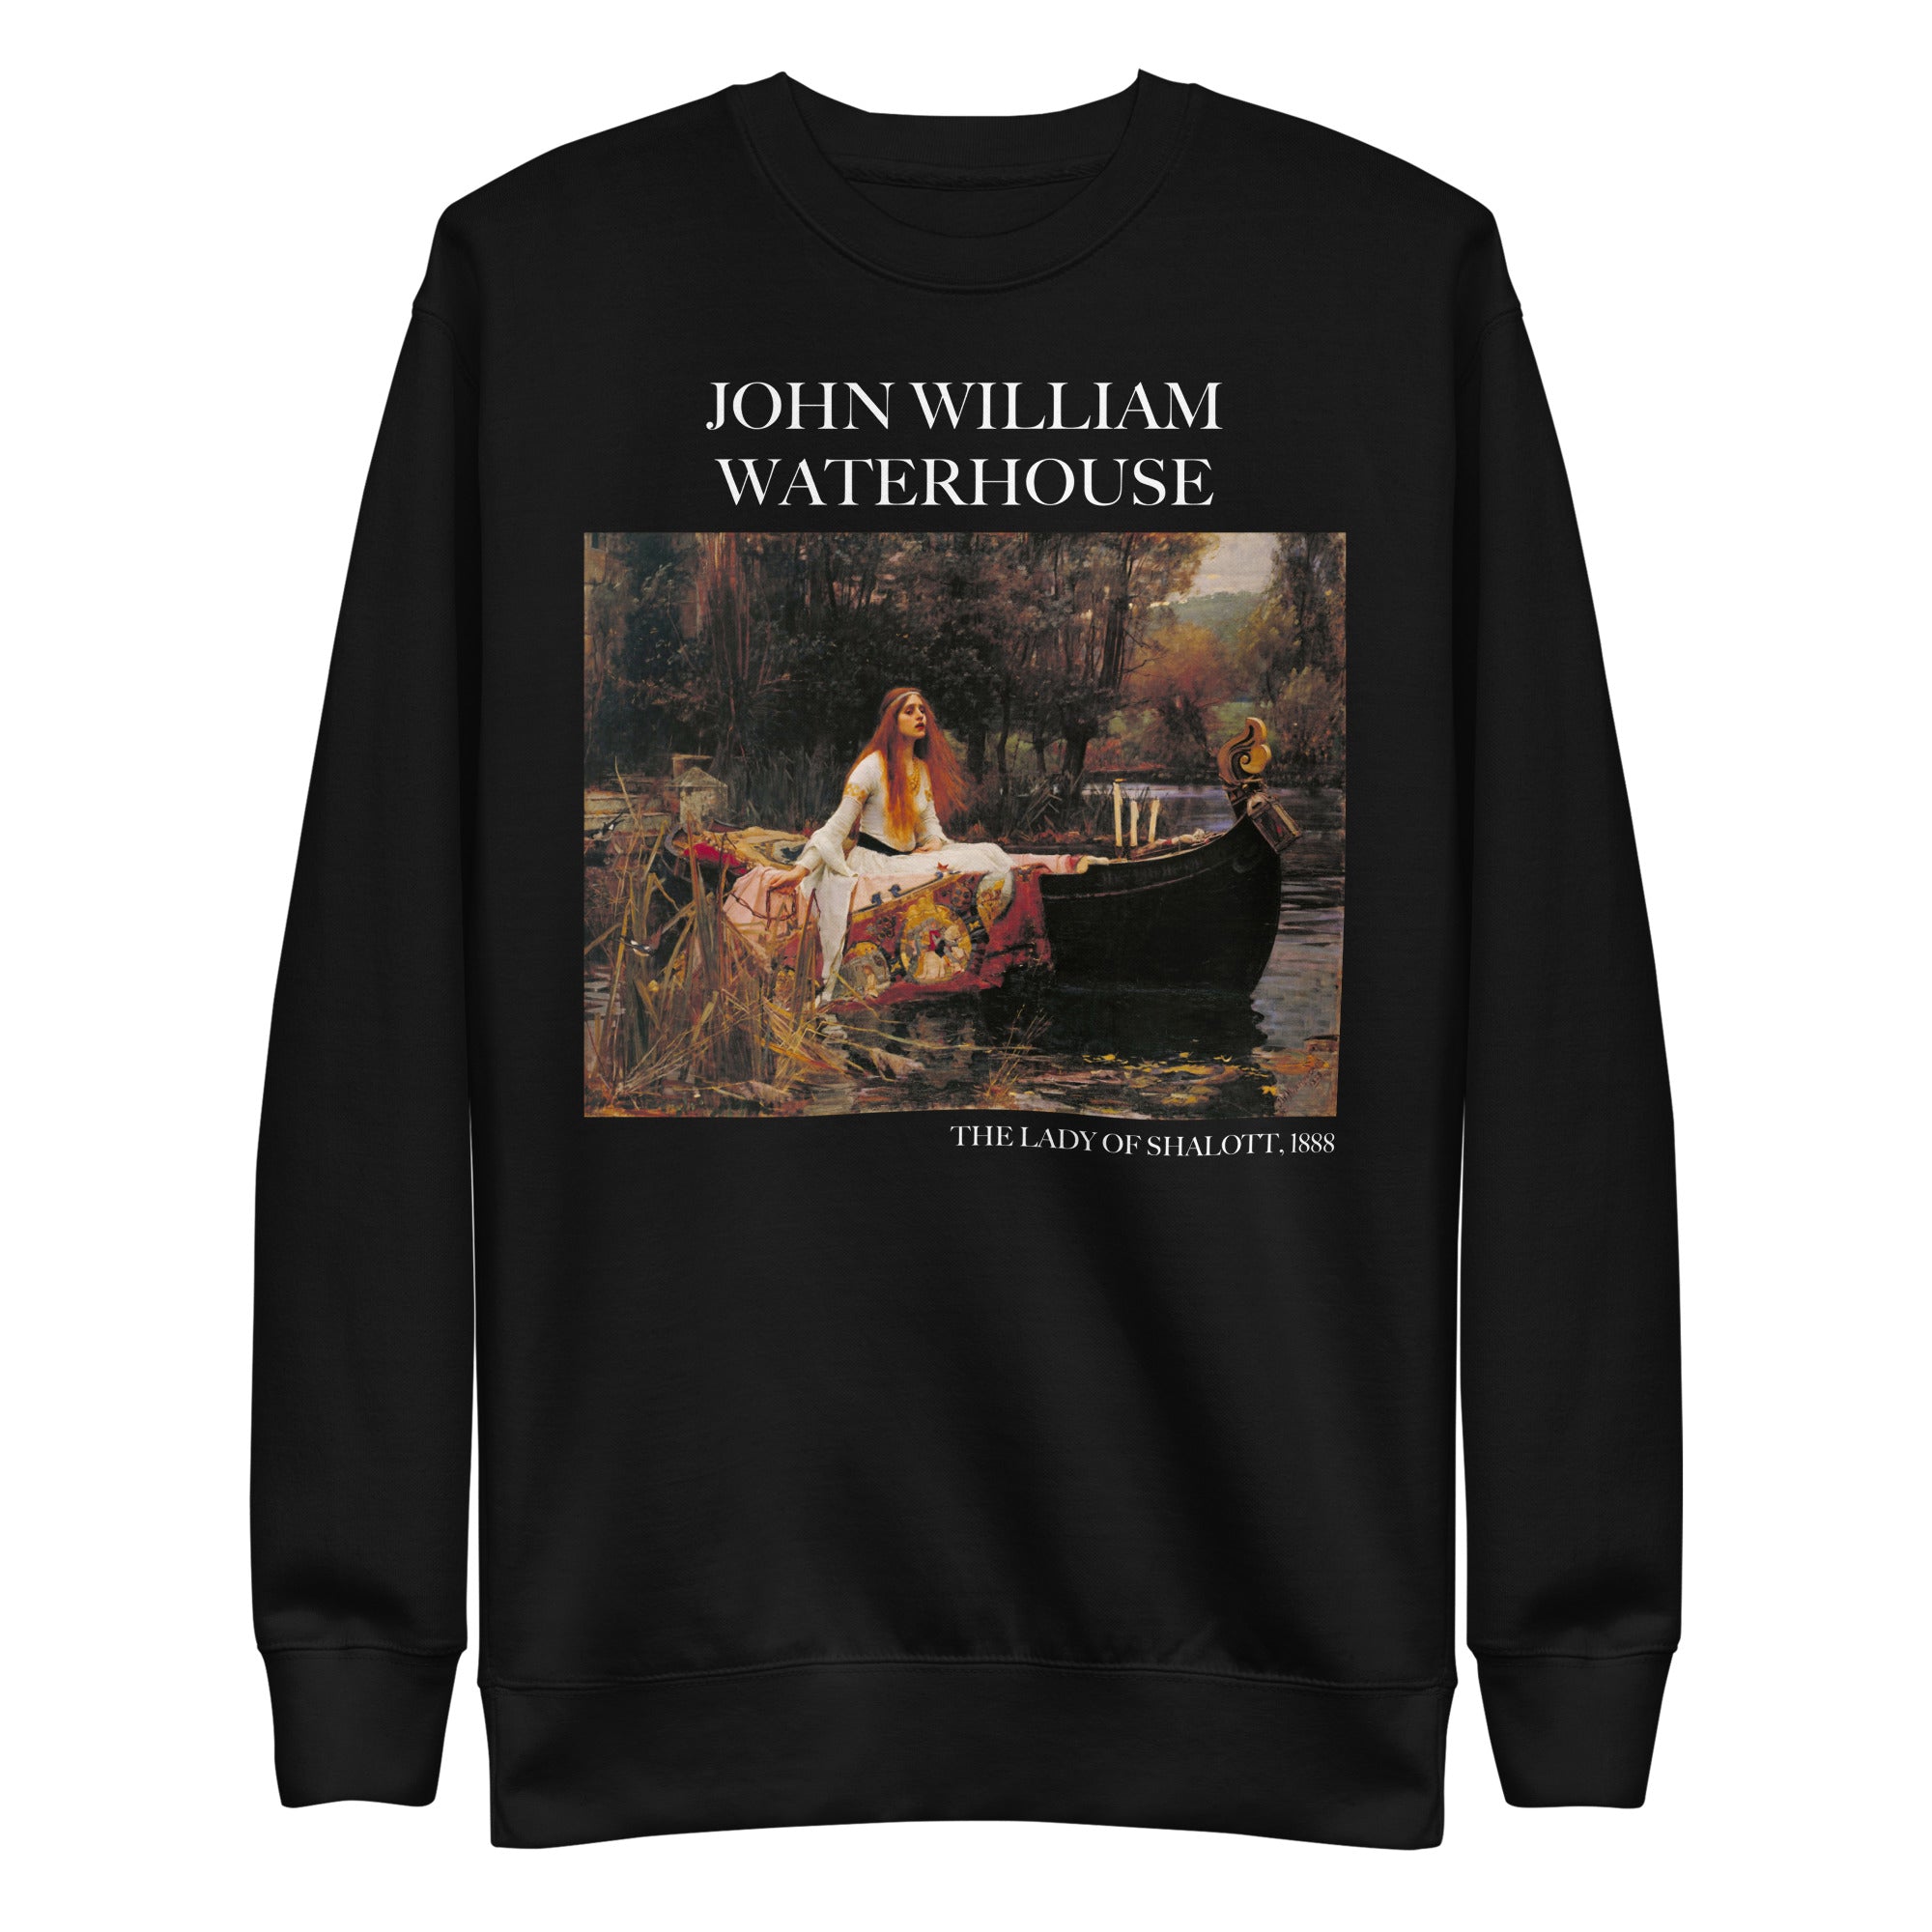 John William Waterhouse 'The Lady of Shalott' Famous Painting Sweatshirt | Unisex Premium Sweatshirt